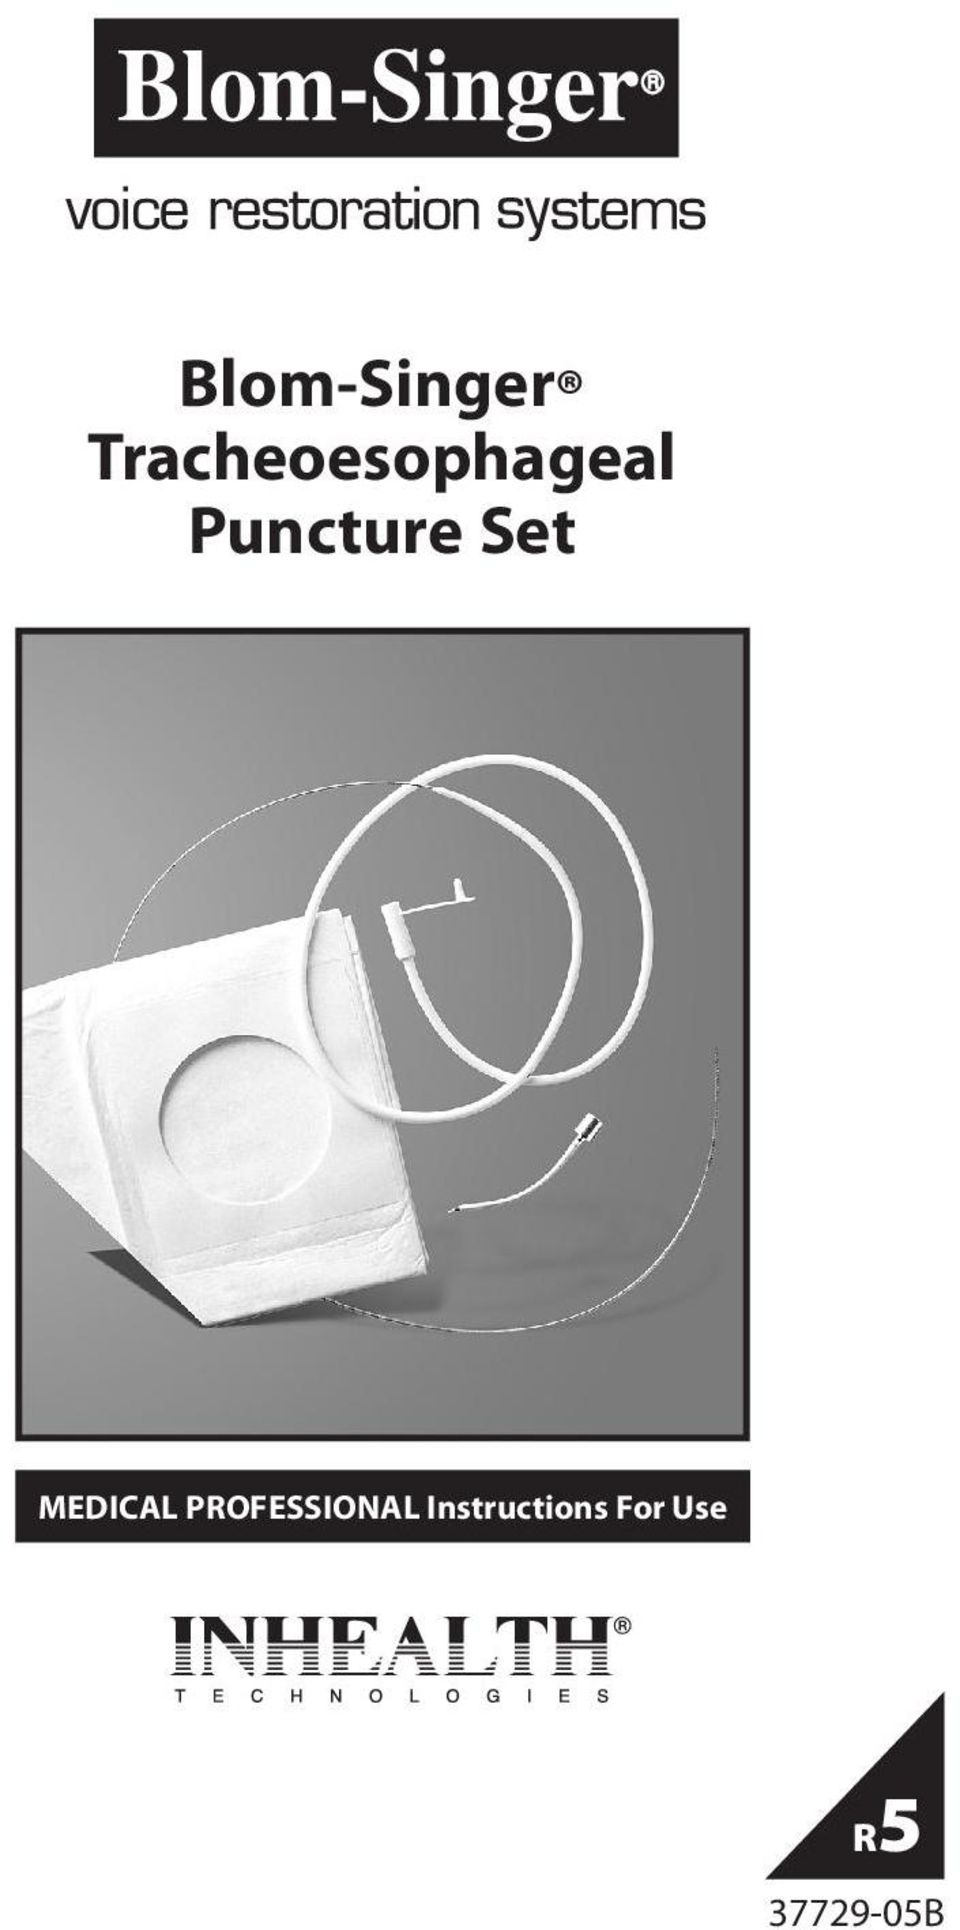 Puncture Set MEDICAL